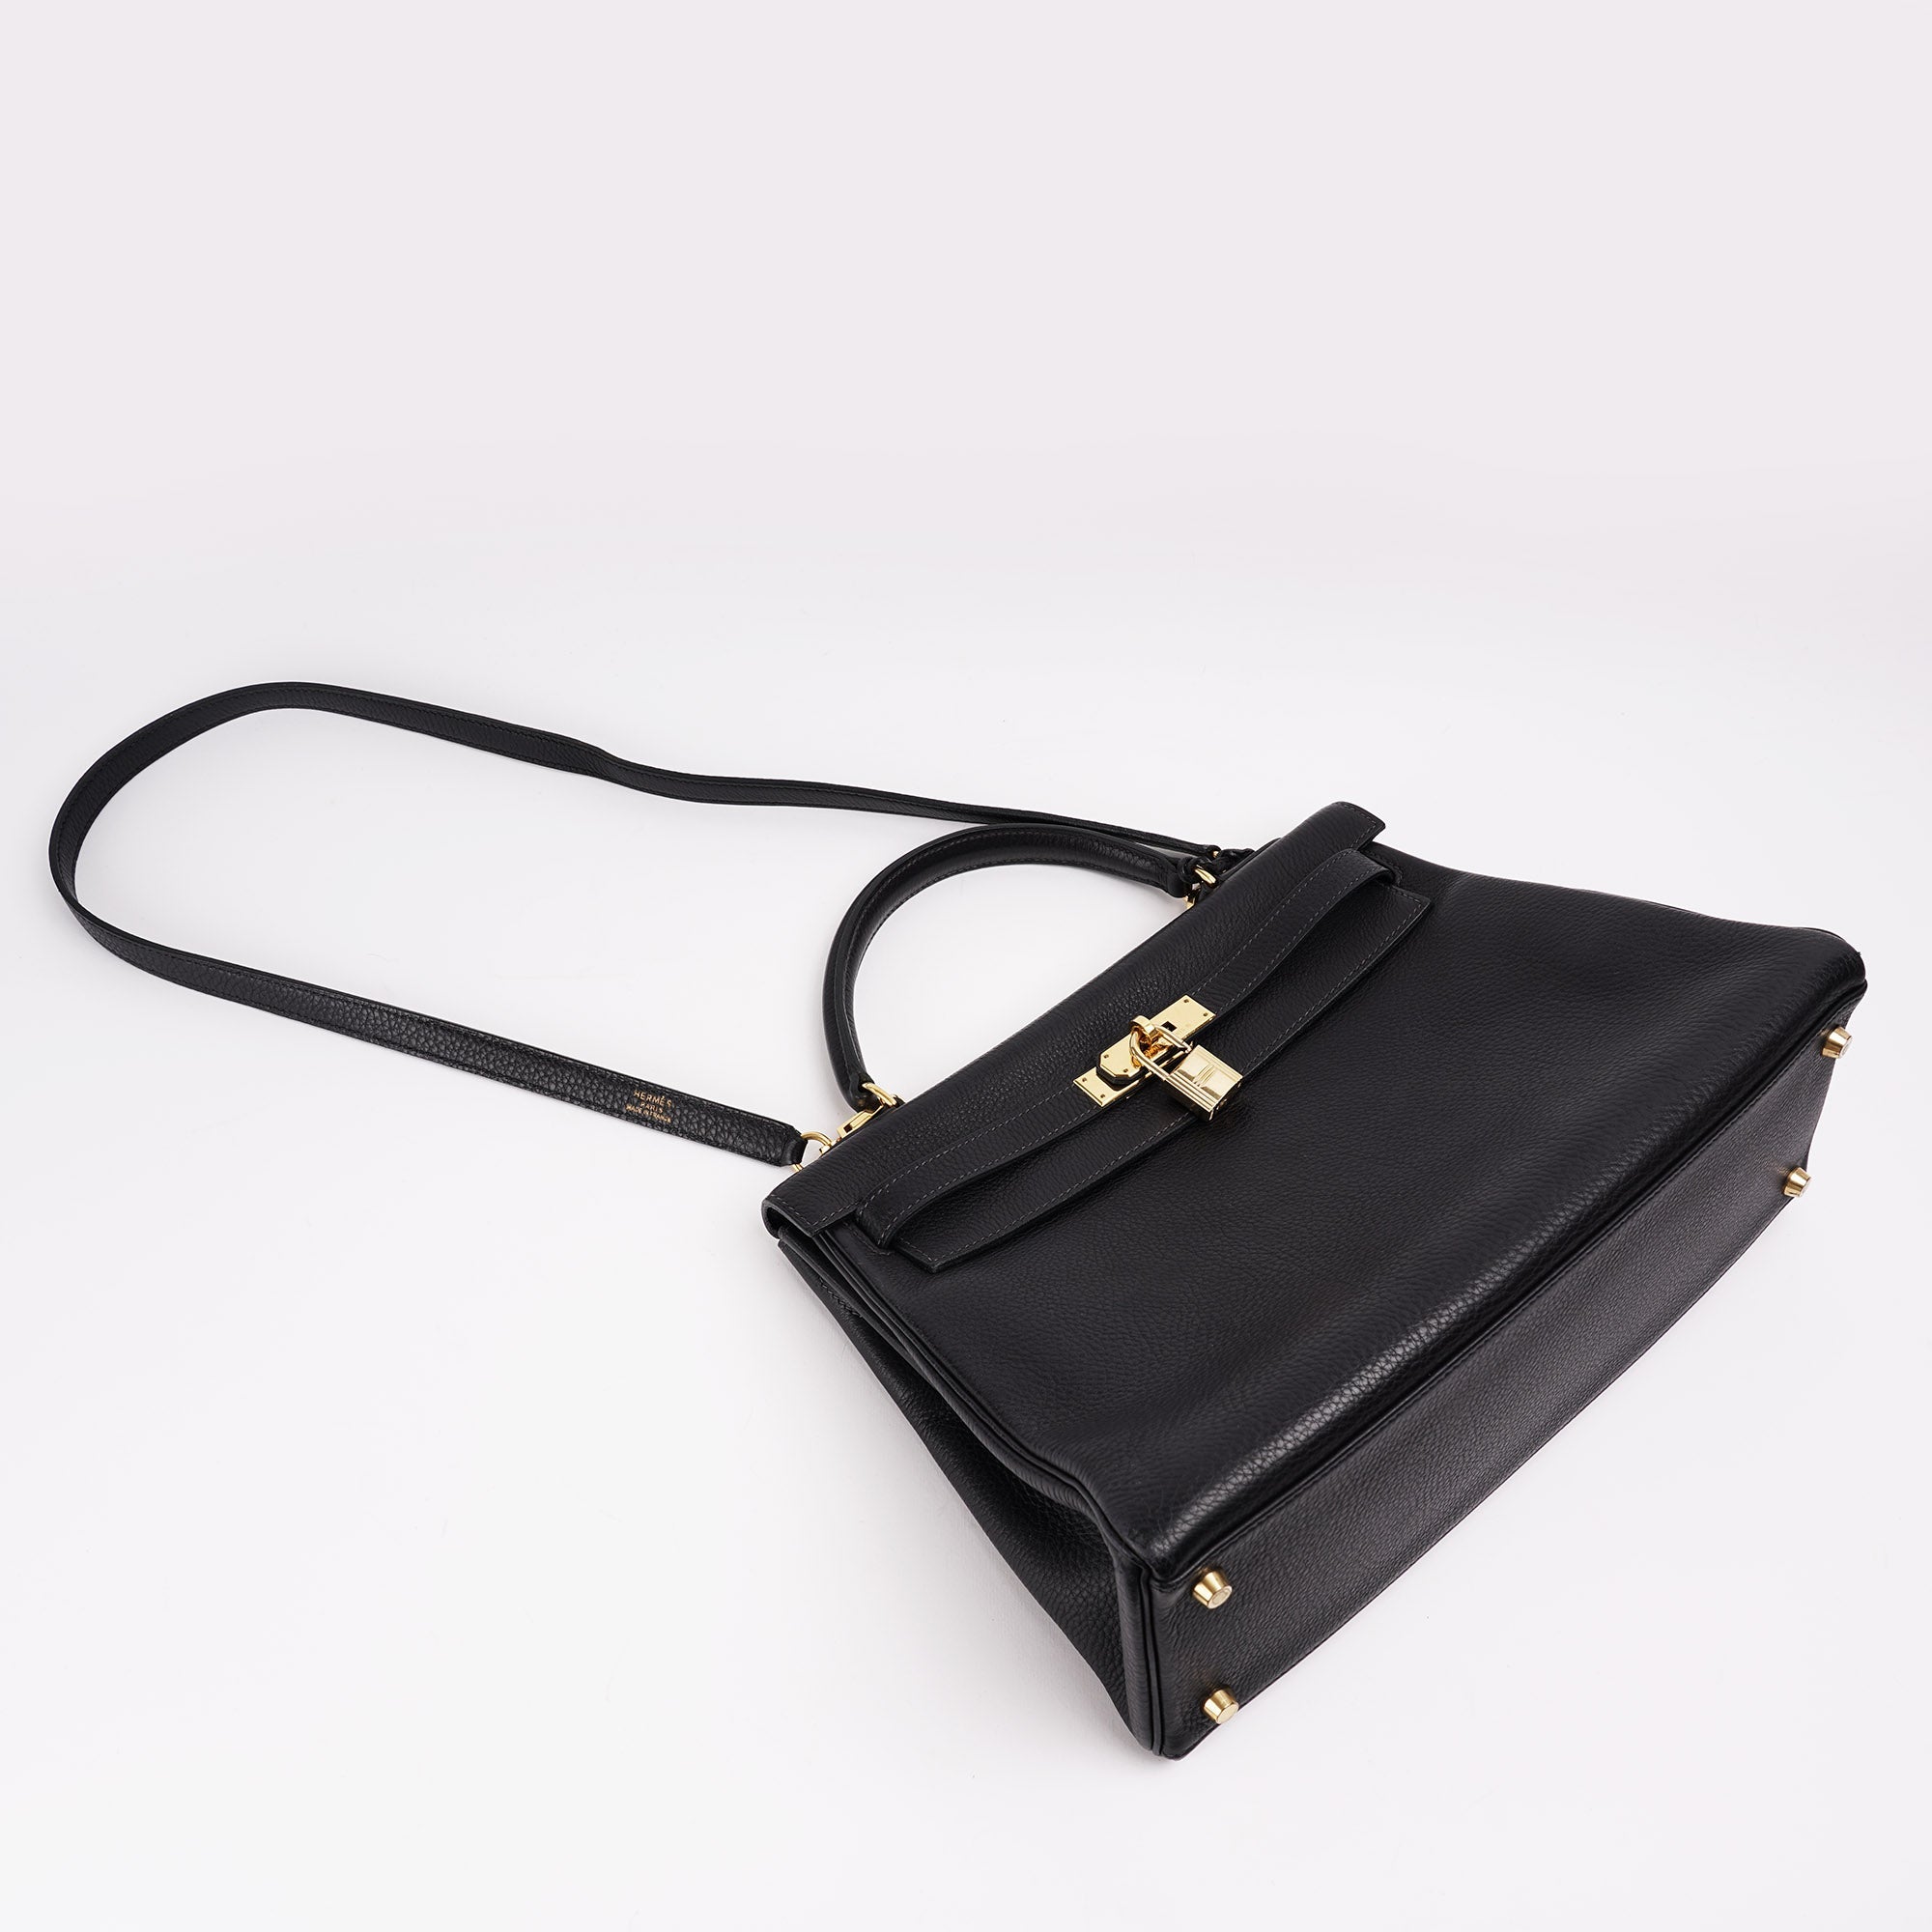 Kelly 32 Handbag - HERMÈS - Affordable Luxury image